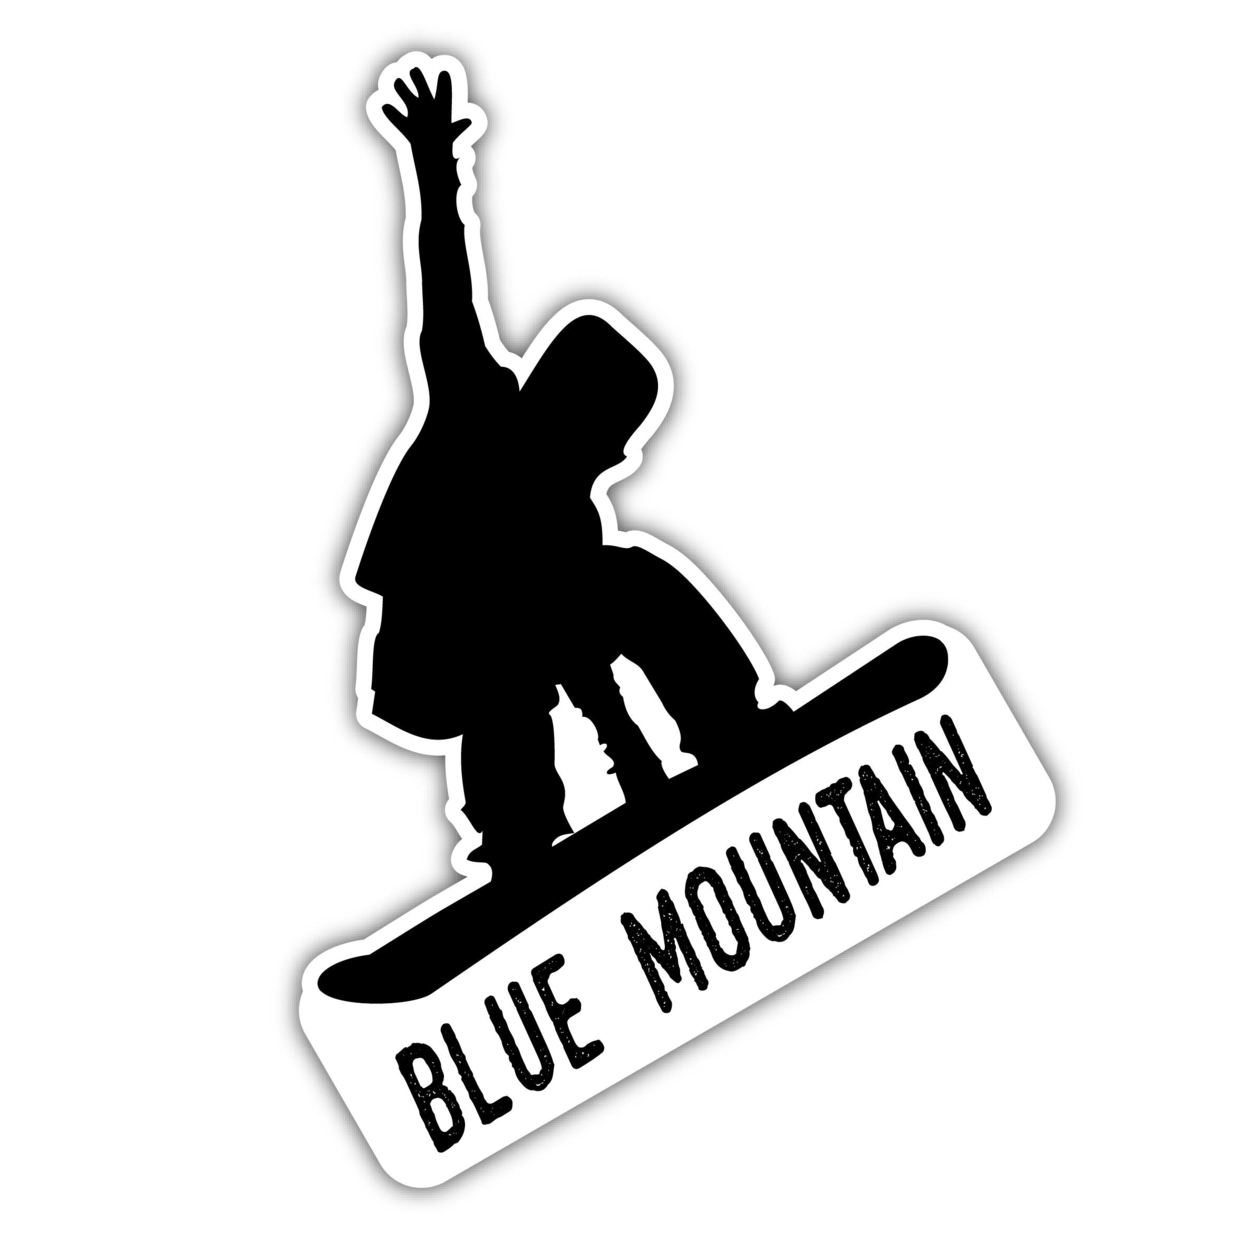 Blue Mountain Pennsylvania Ski Adventures Souvenir Approximately 5 X 2.5-Inch Vinyl Decal Sticker Goggle Design